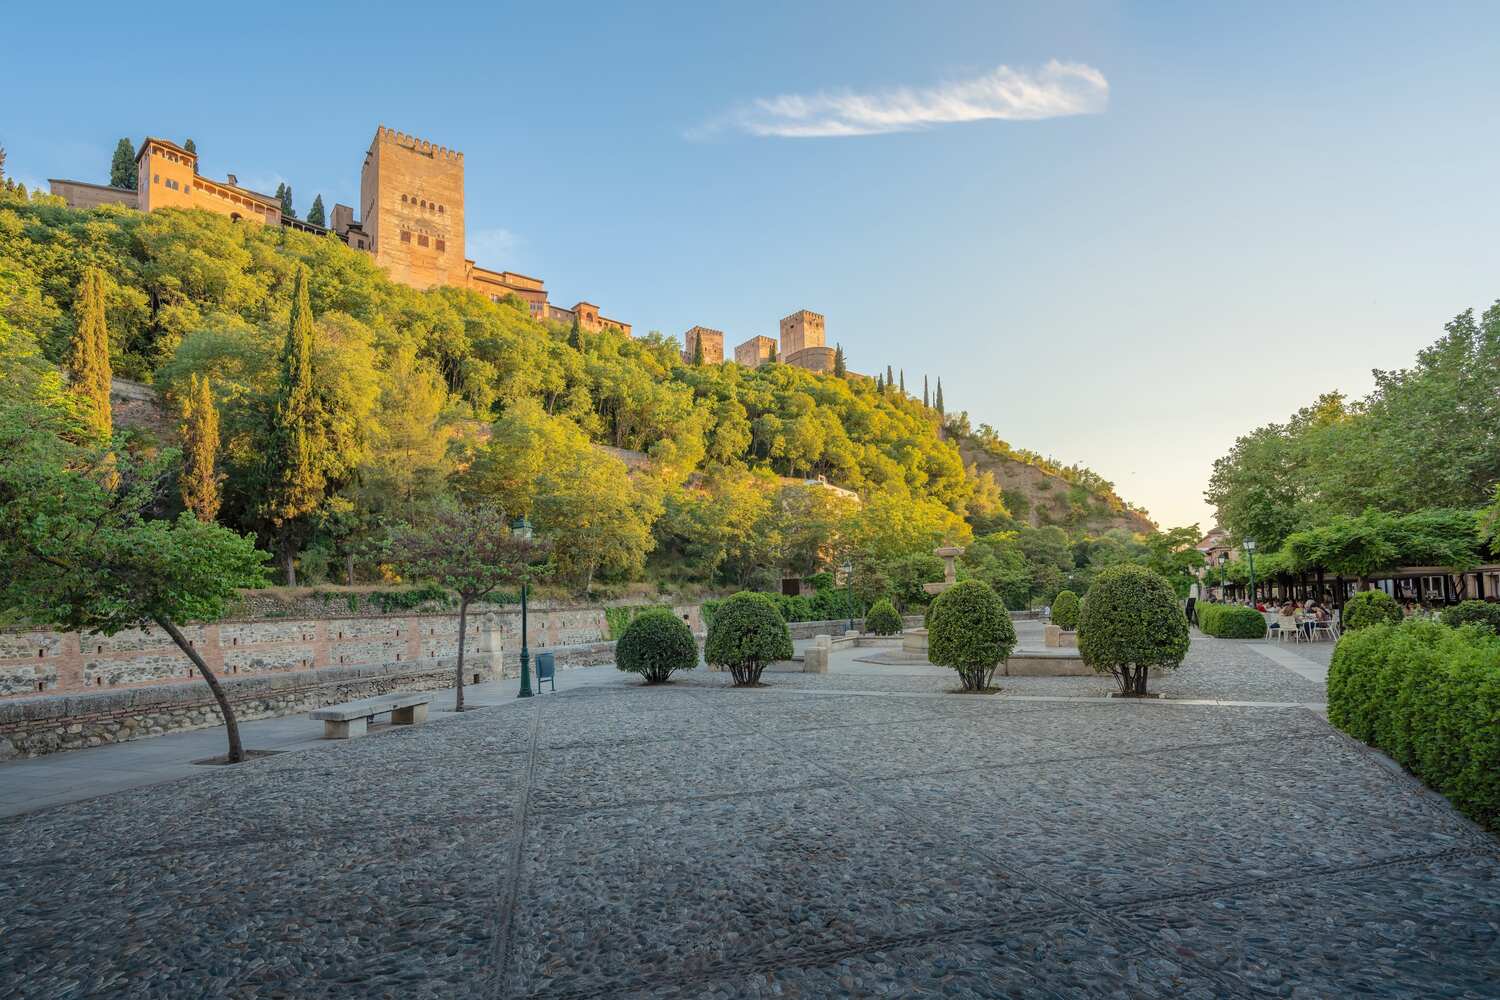 Paseo de los tristes in Granada with views over the Alhambra